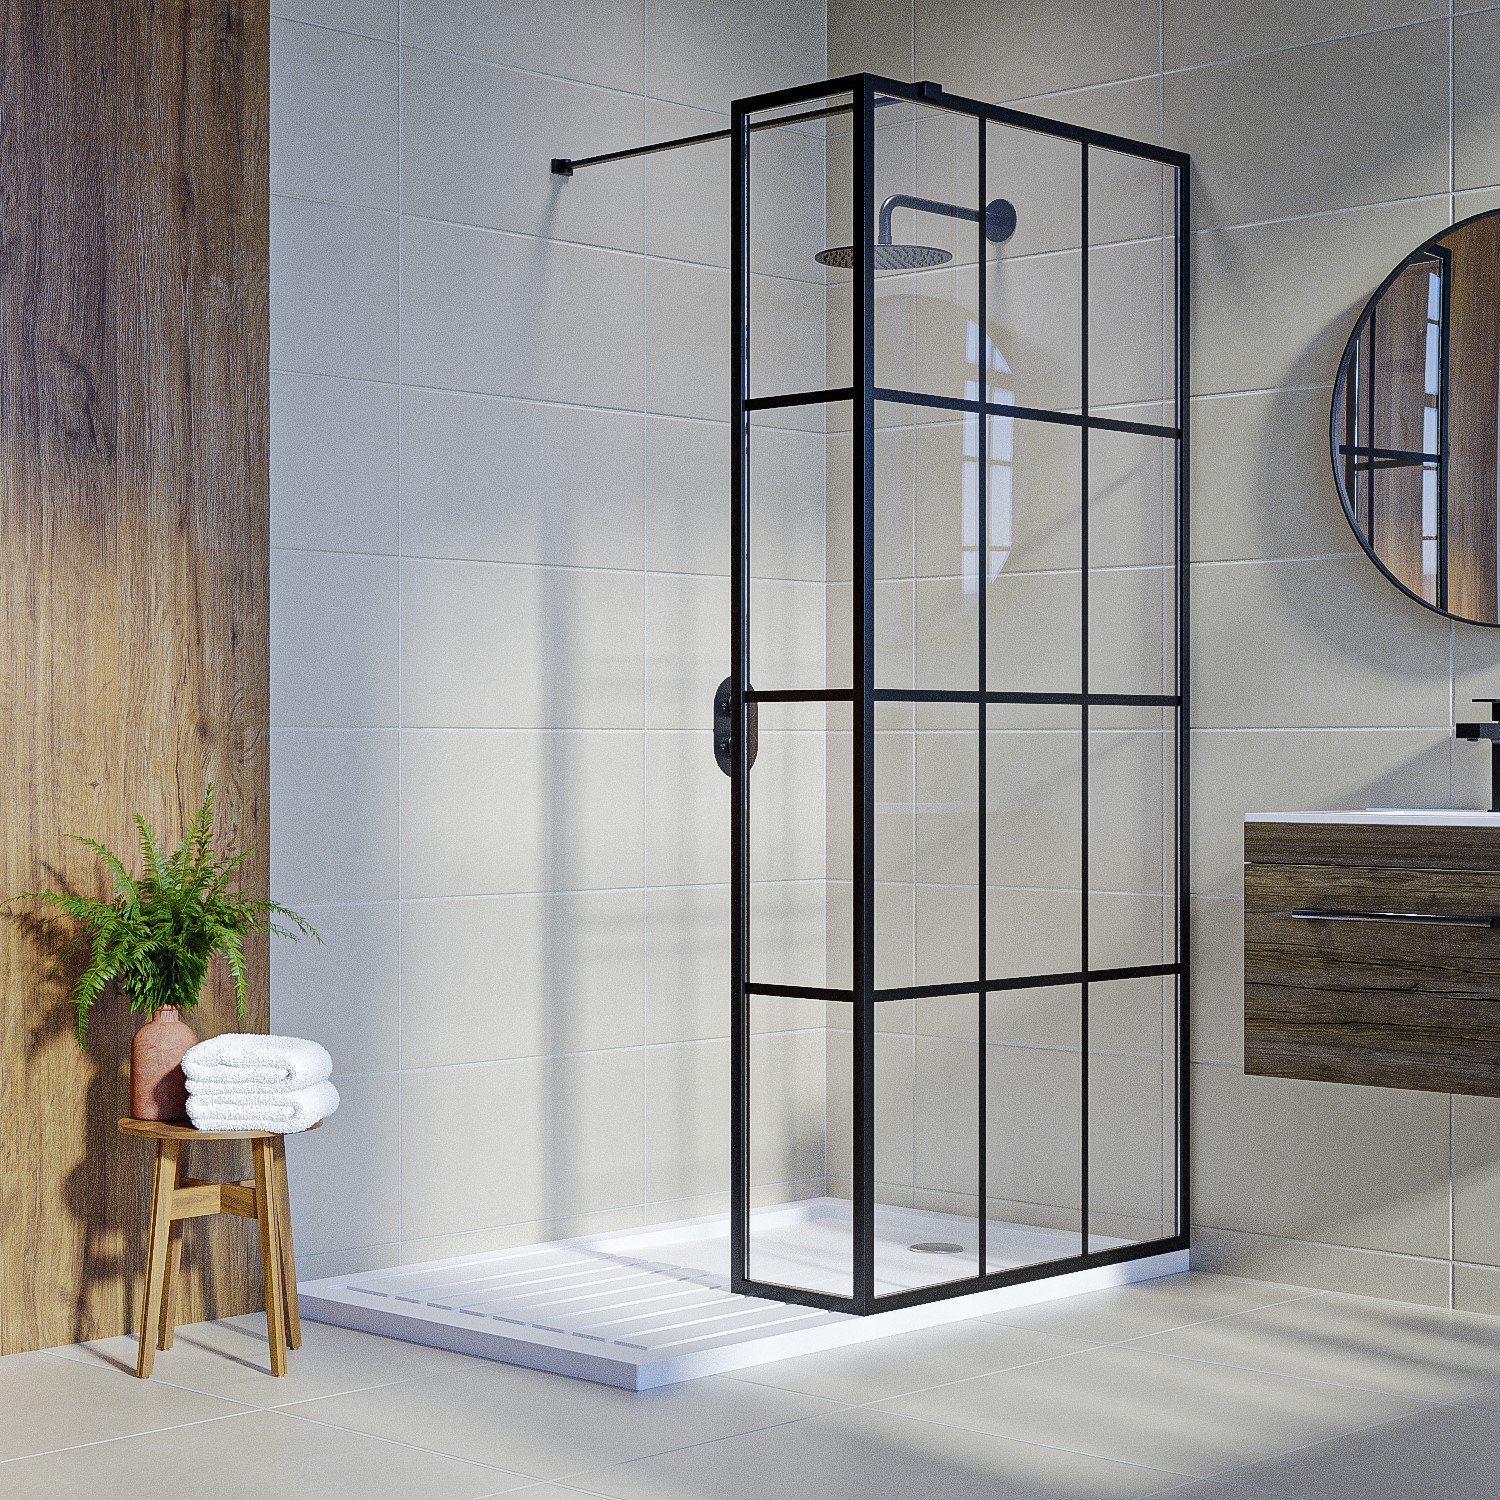 Black 1200mm Grid Wet Room Shower Screen with Wall Support Bar & Return Panel - Nova